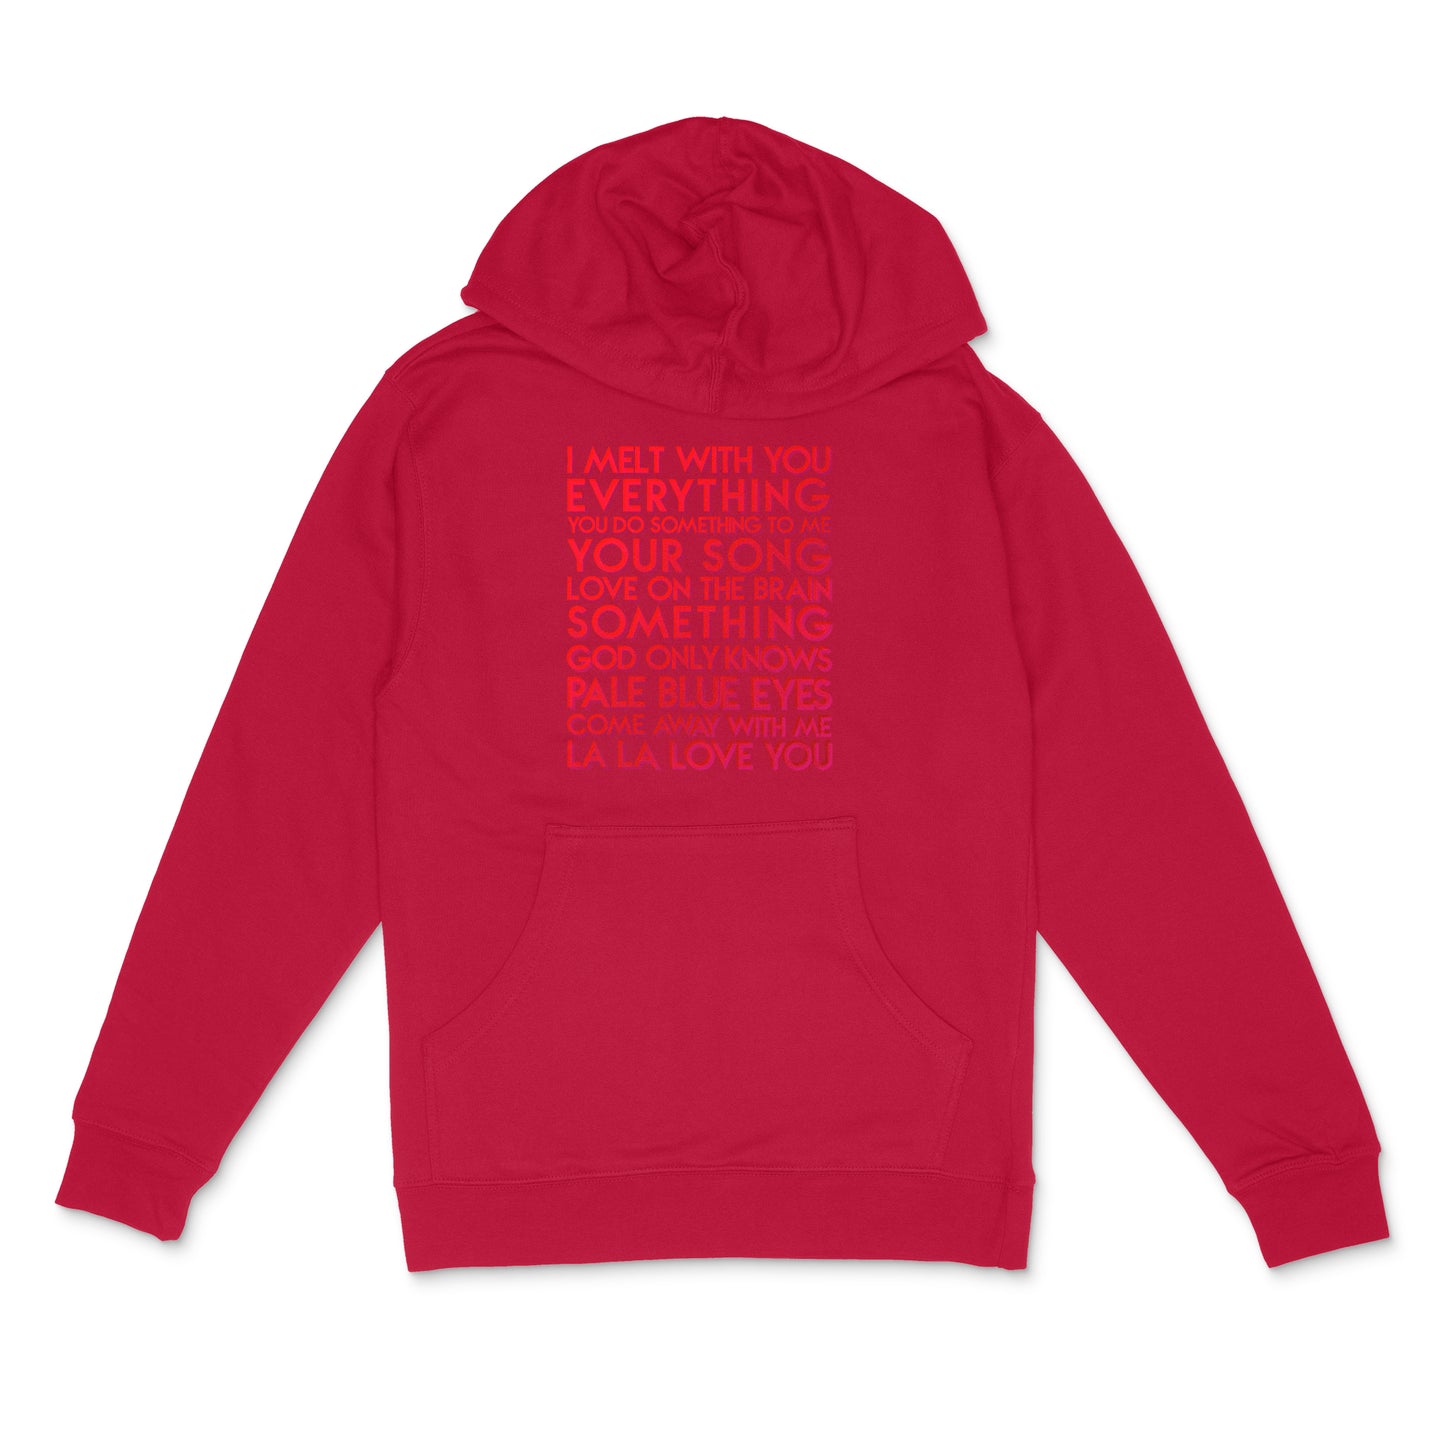 custom sample - love songs custom red metallic text on red unisex pullover hoodie - Custom YourTen sweatshirt by BBJ / Glitter Garage